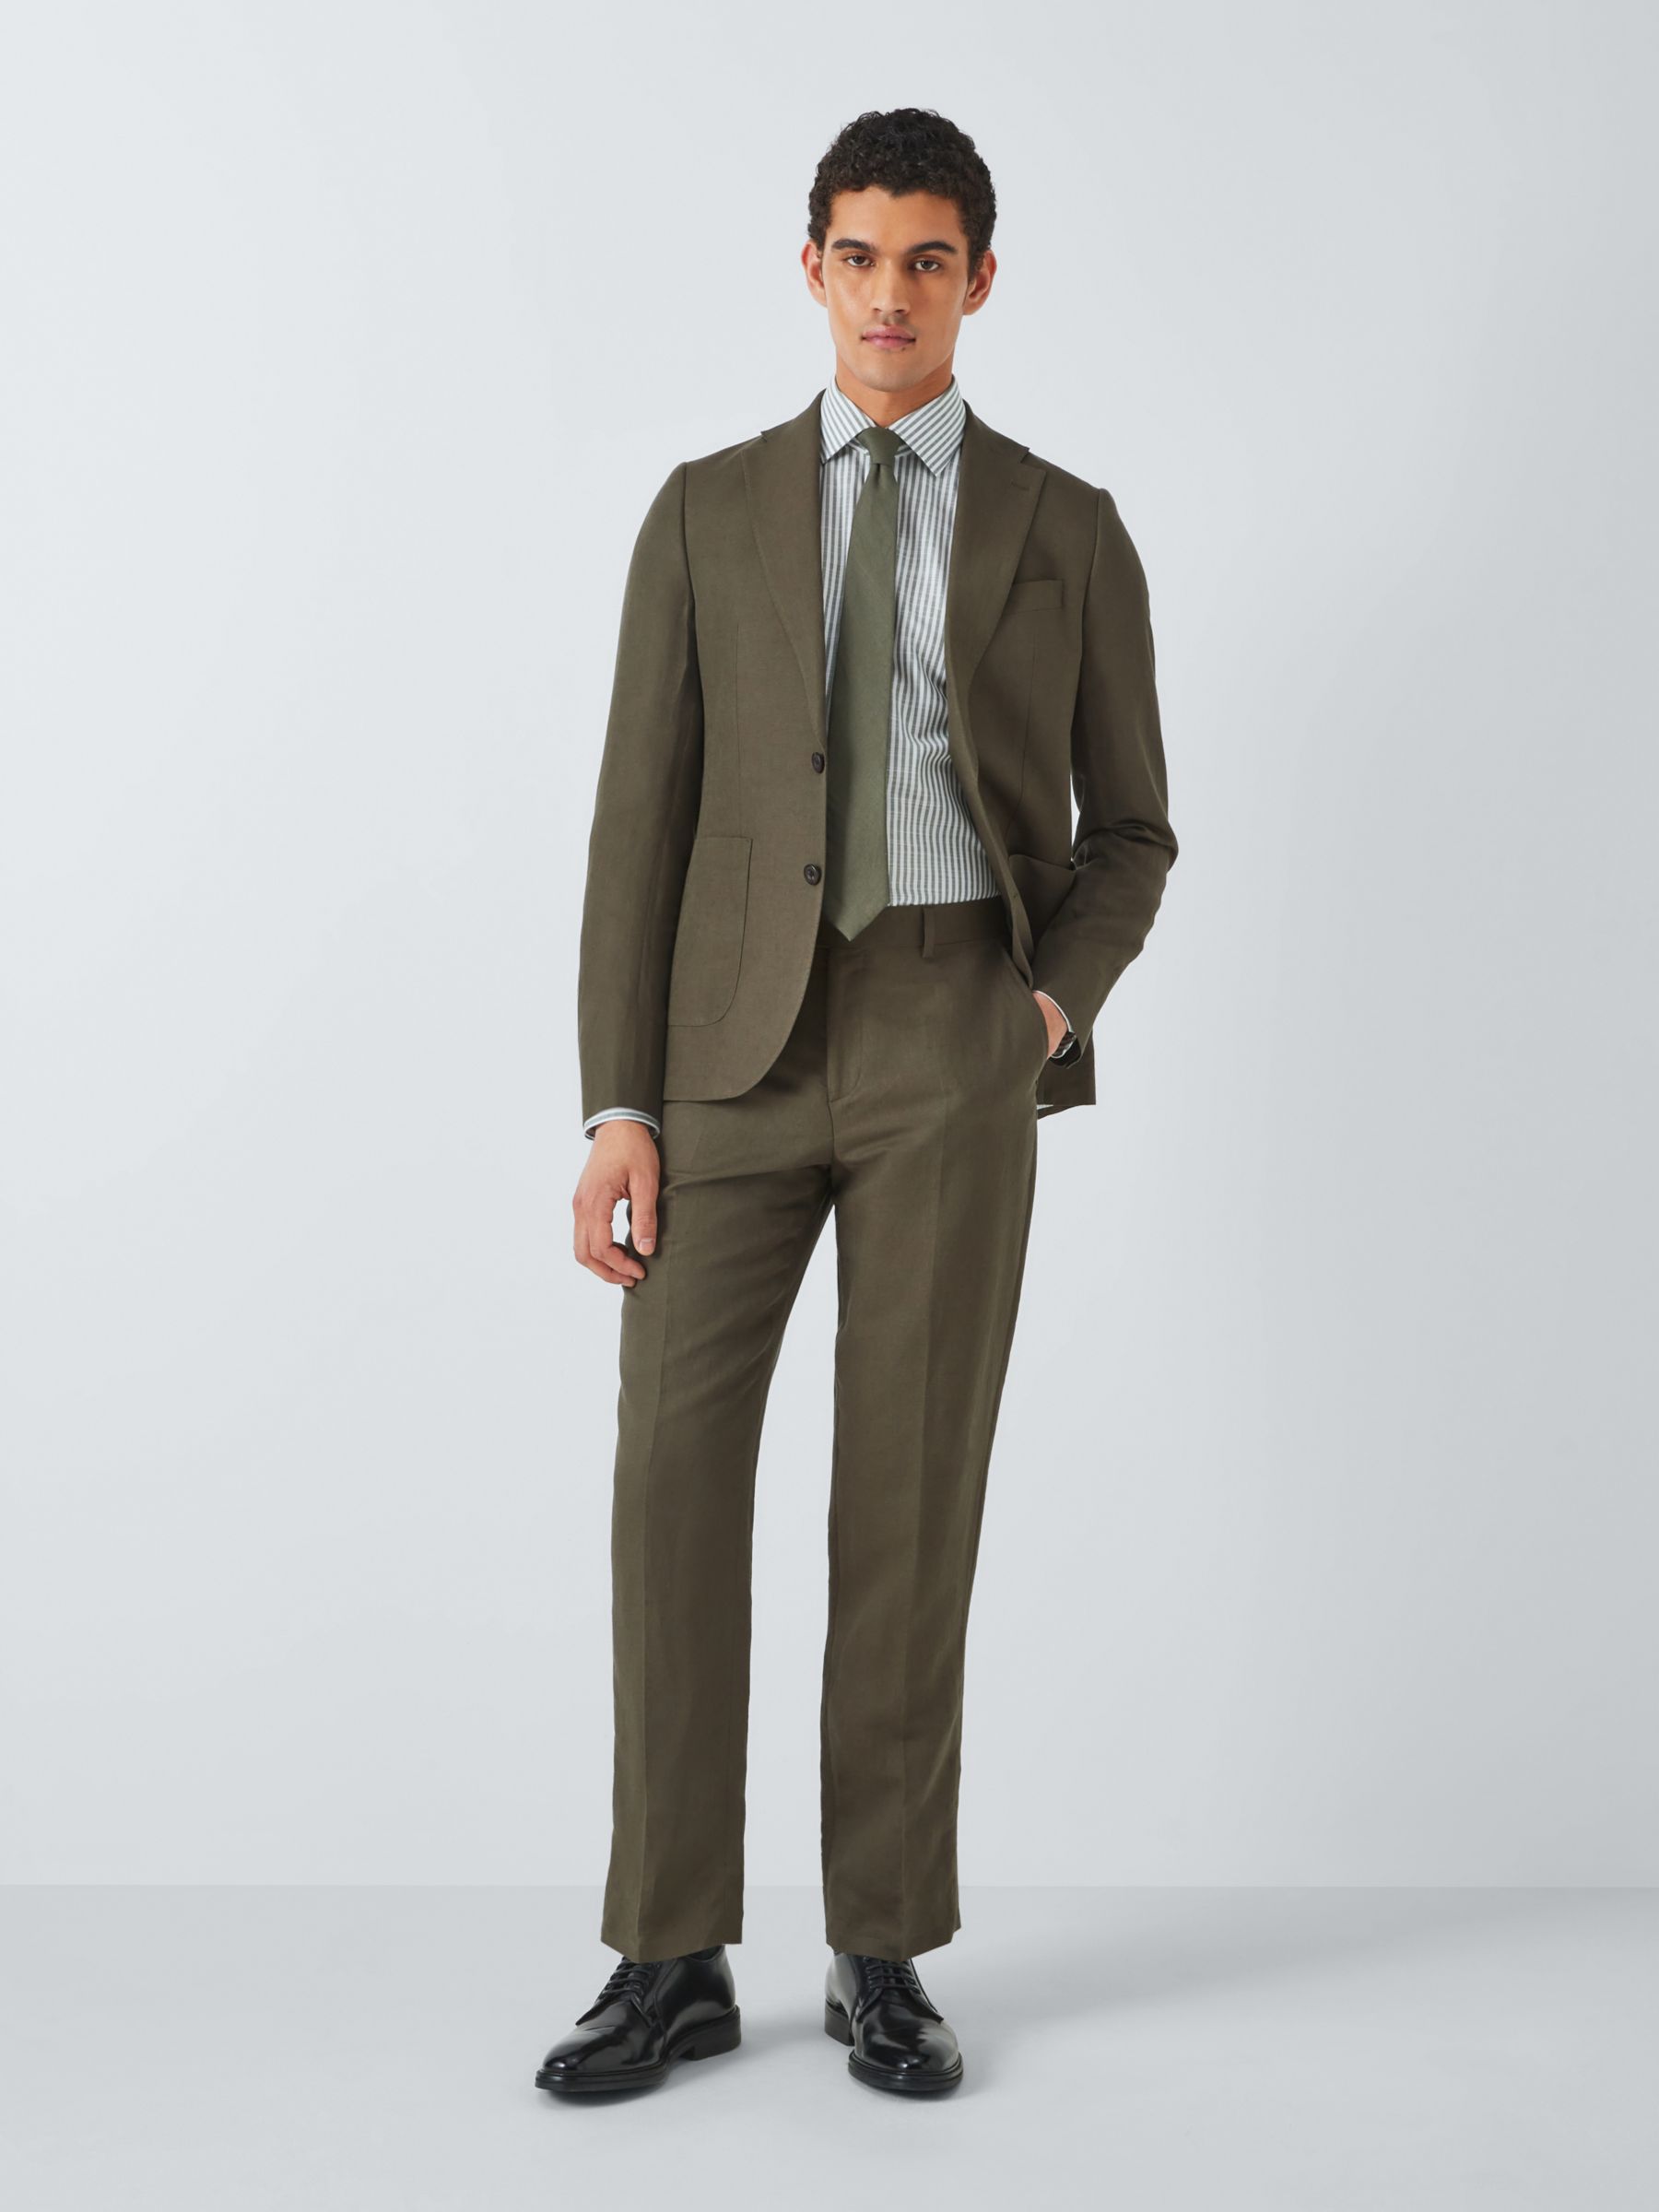 John Lewis Ashwell Linen Blend Regular Fit Suit Trousers, Khaki Green, 32R